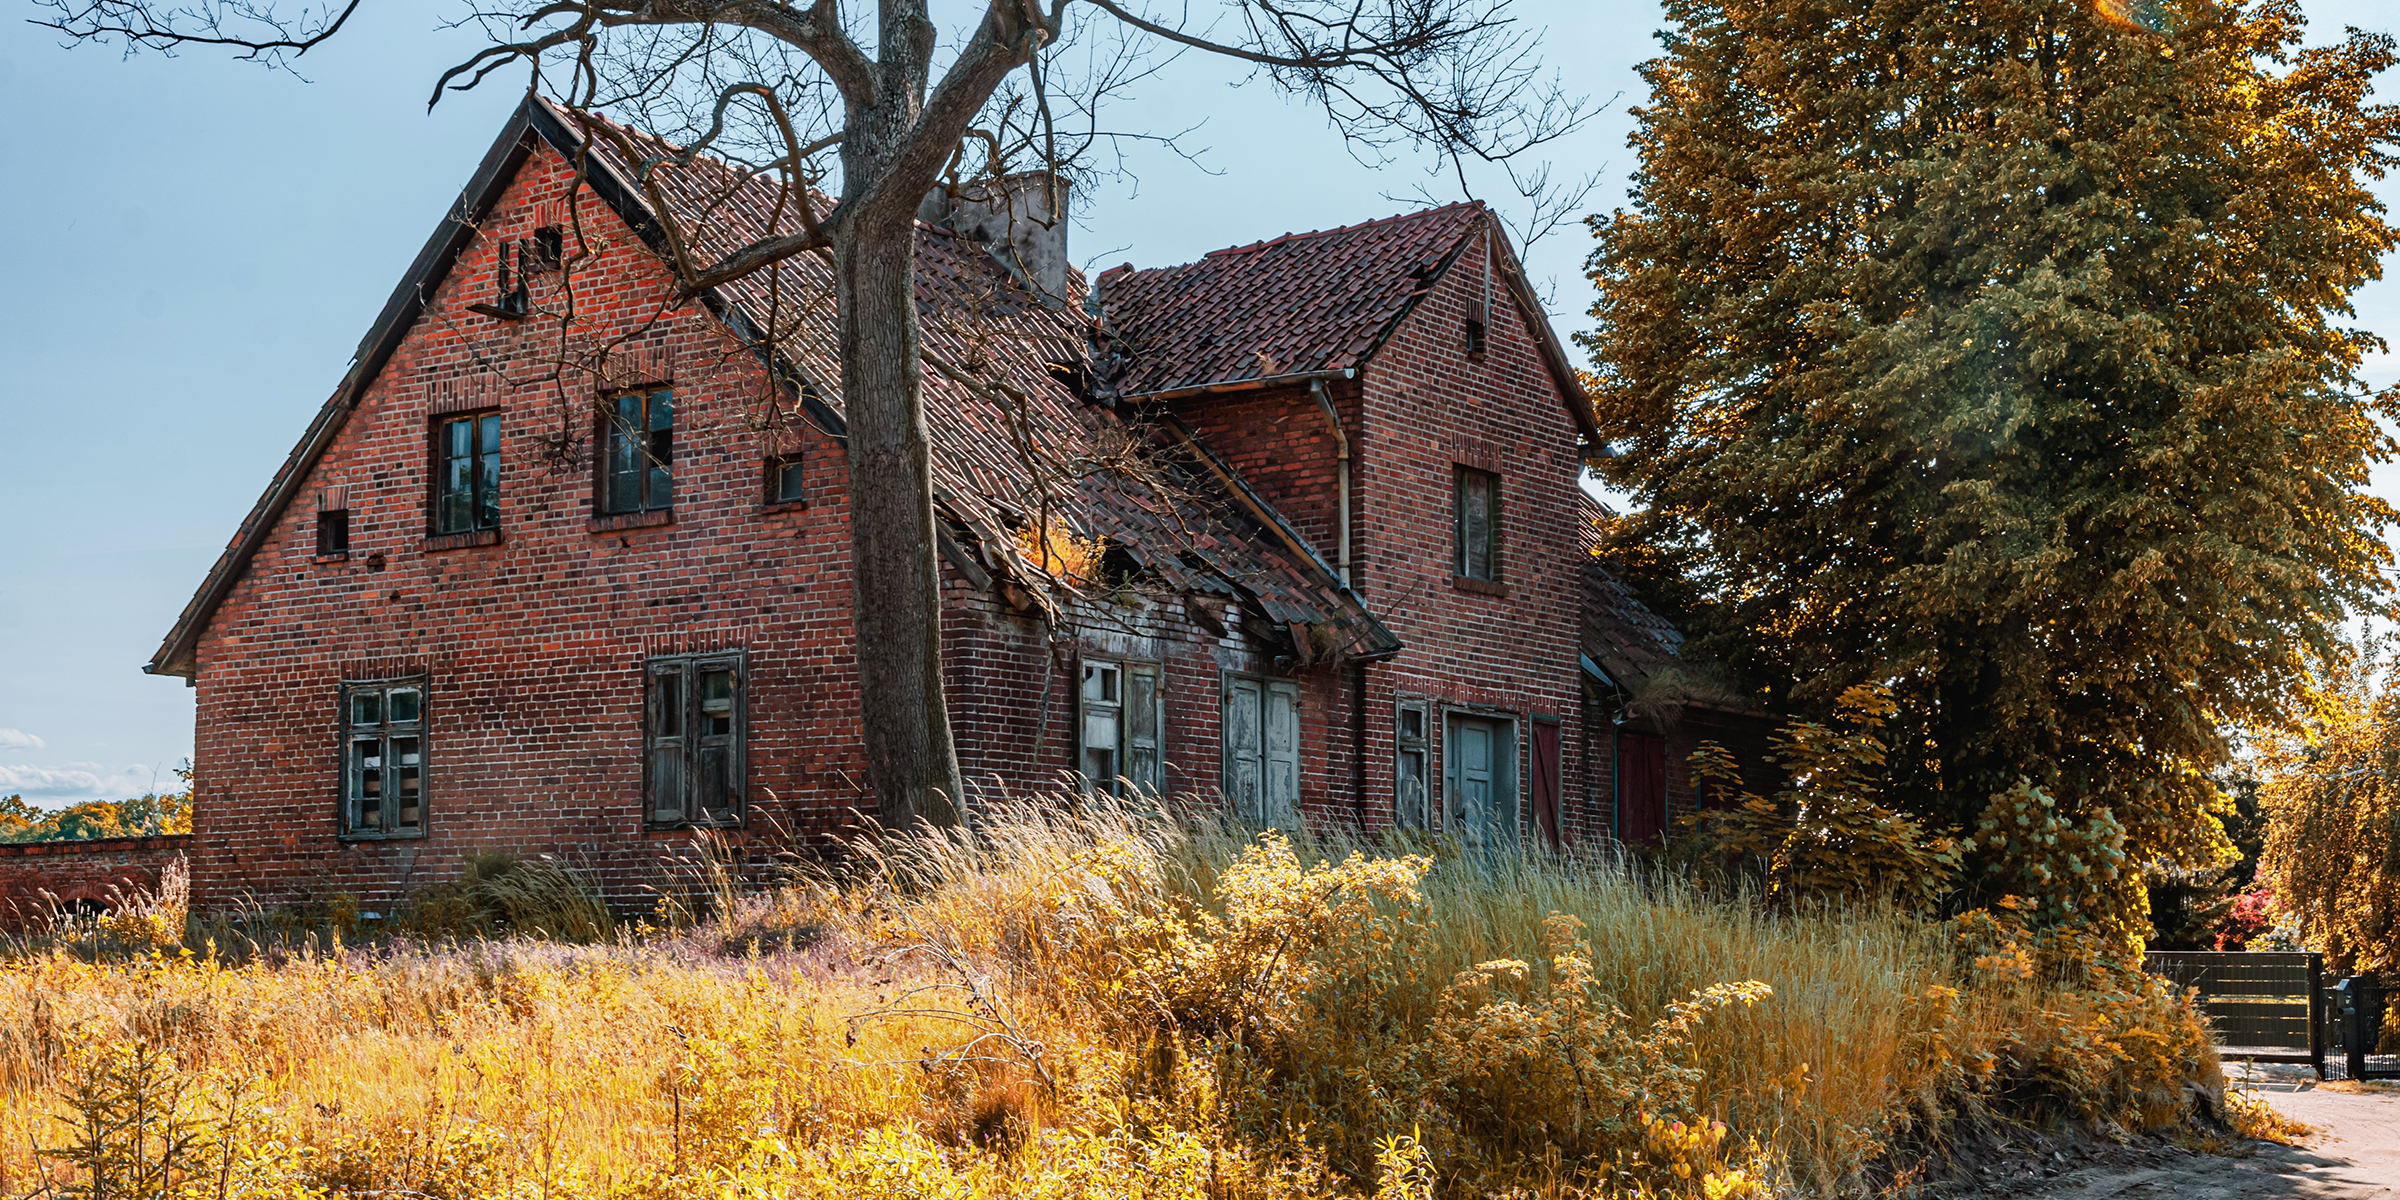 An abandoned house | Source: Shutterstock